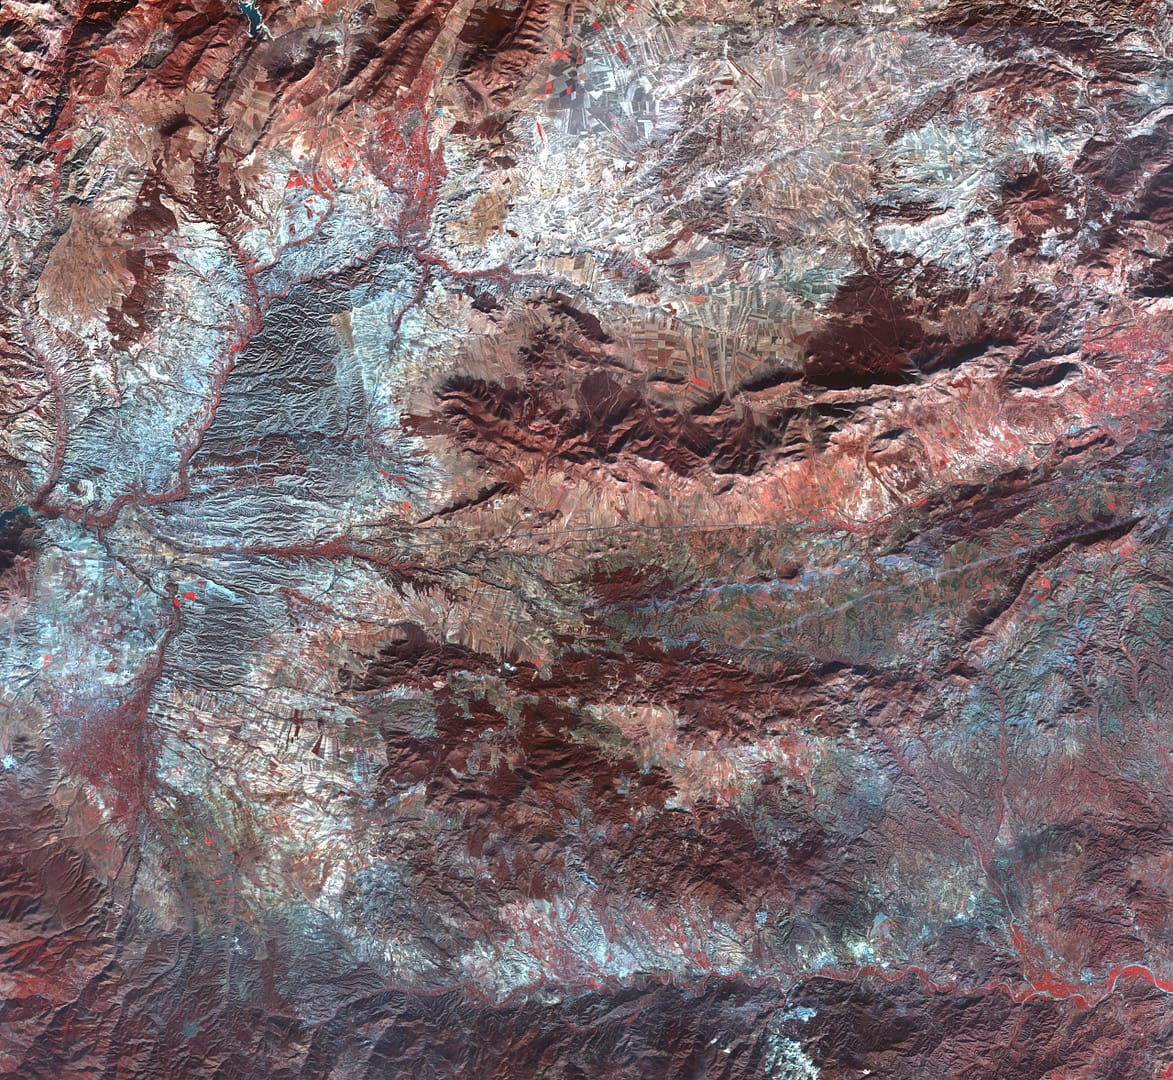 ALVELAL Sentinel2 satellite image. False color comp[osite. Date: 16-2-2015